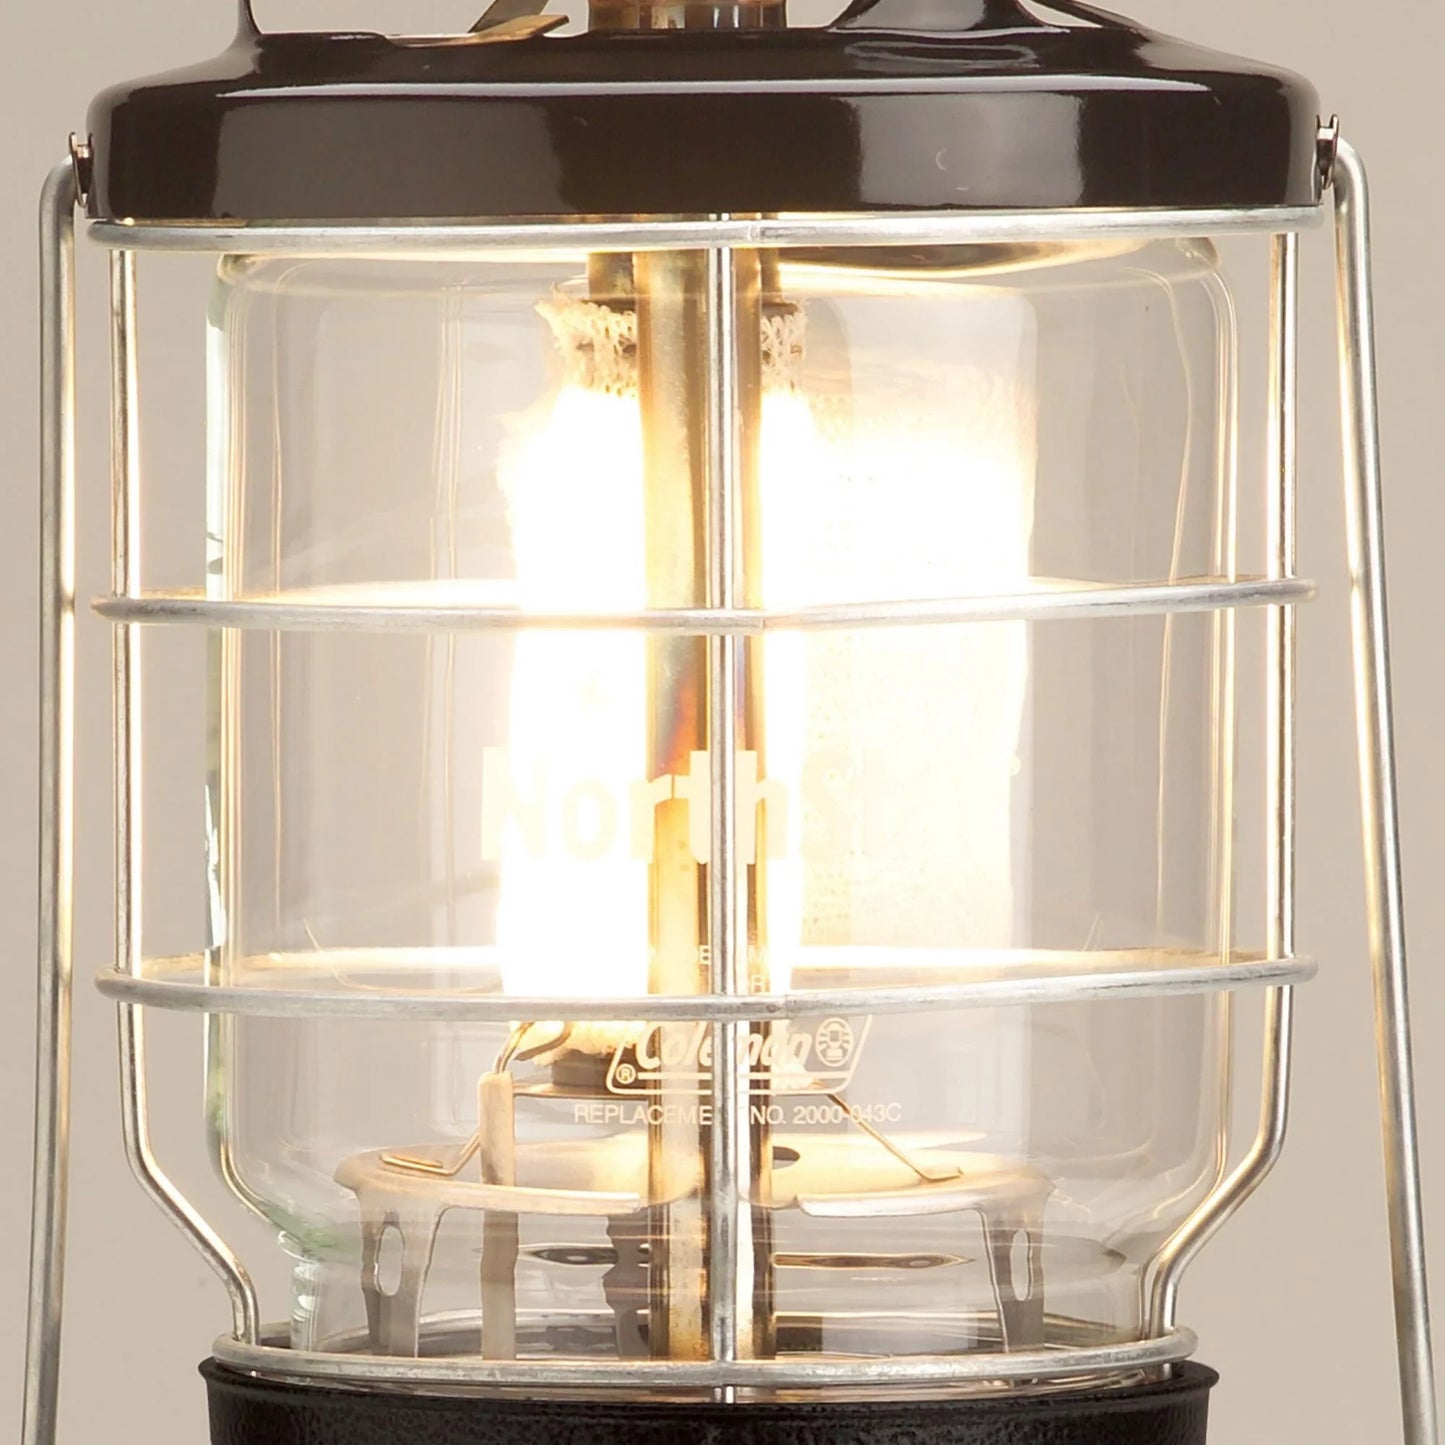 NorthStar 1500 Lumens 1-Mantle Propane Lantern